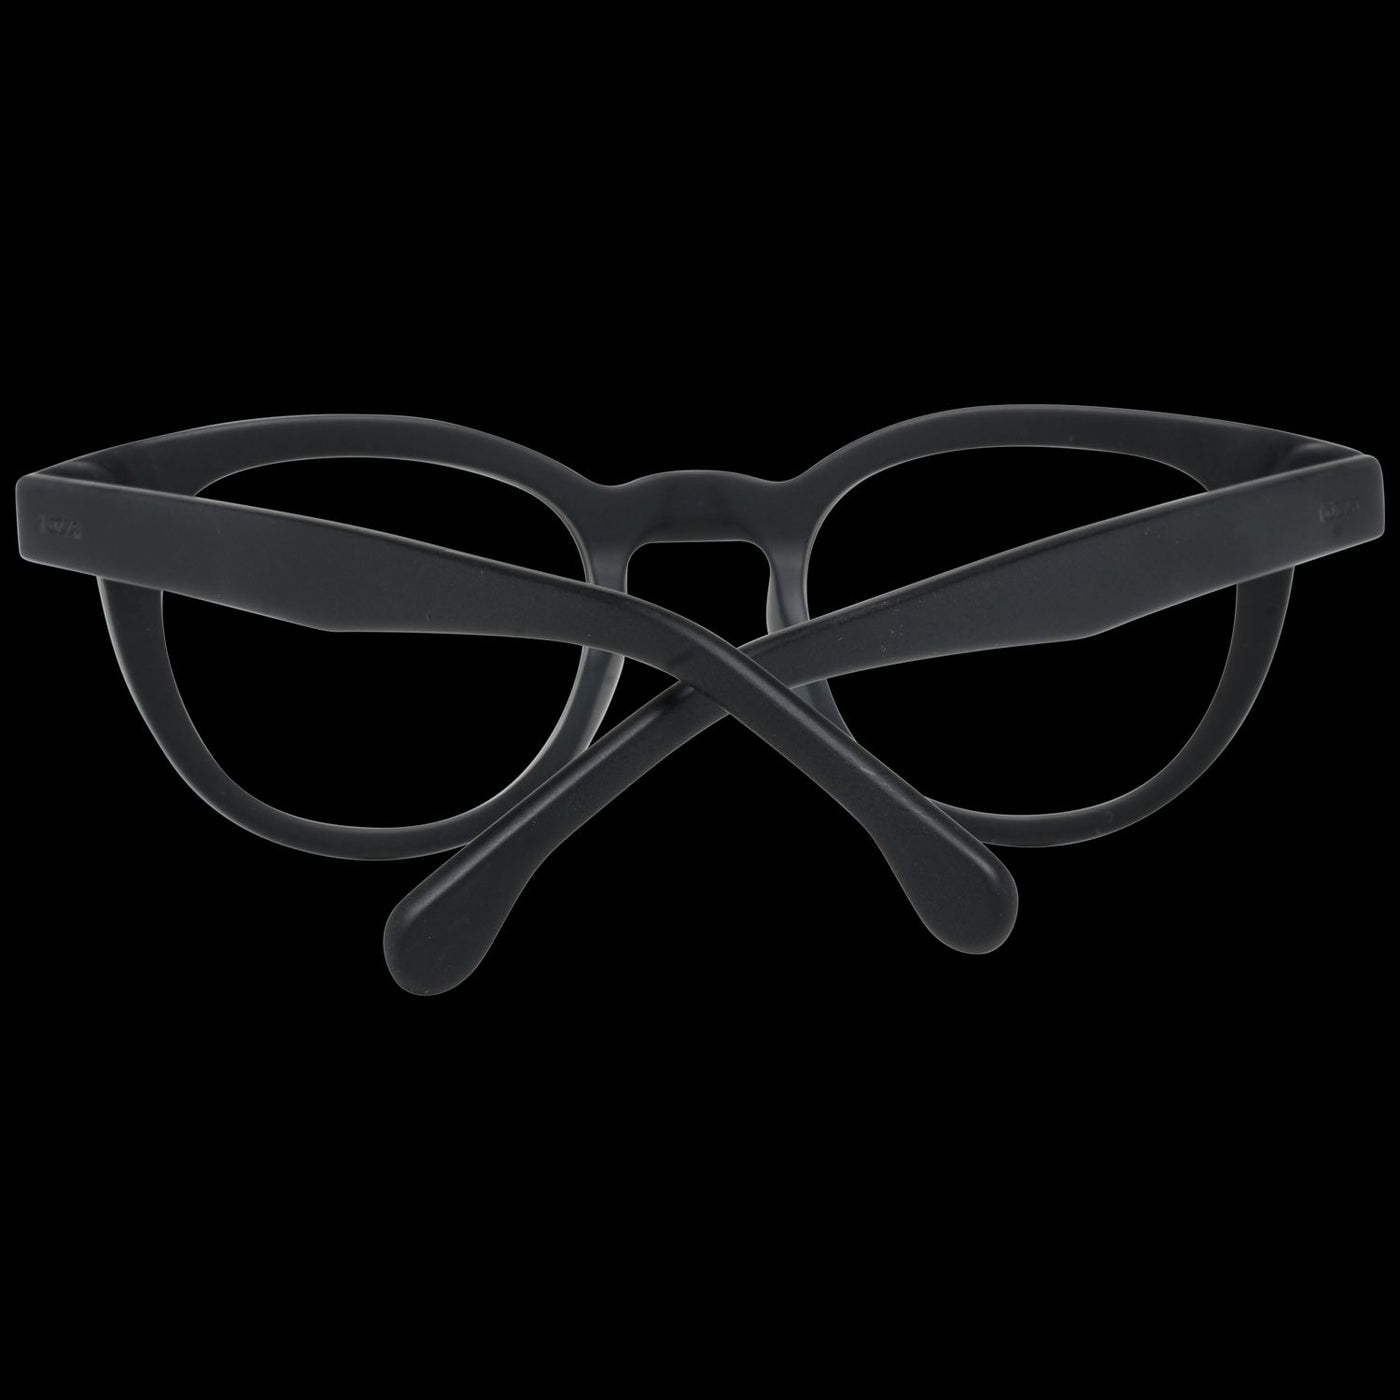 Lozza Black Unisex Optical Frames